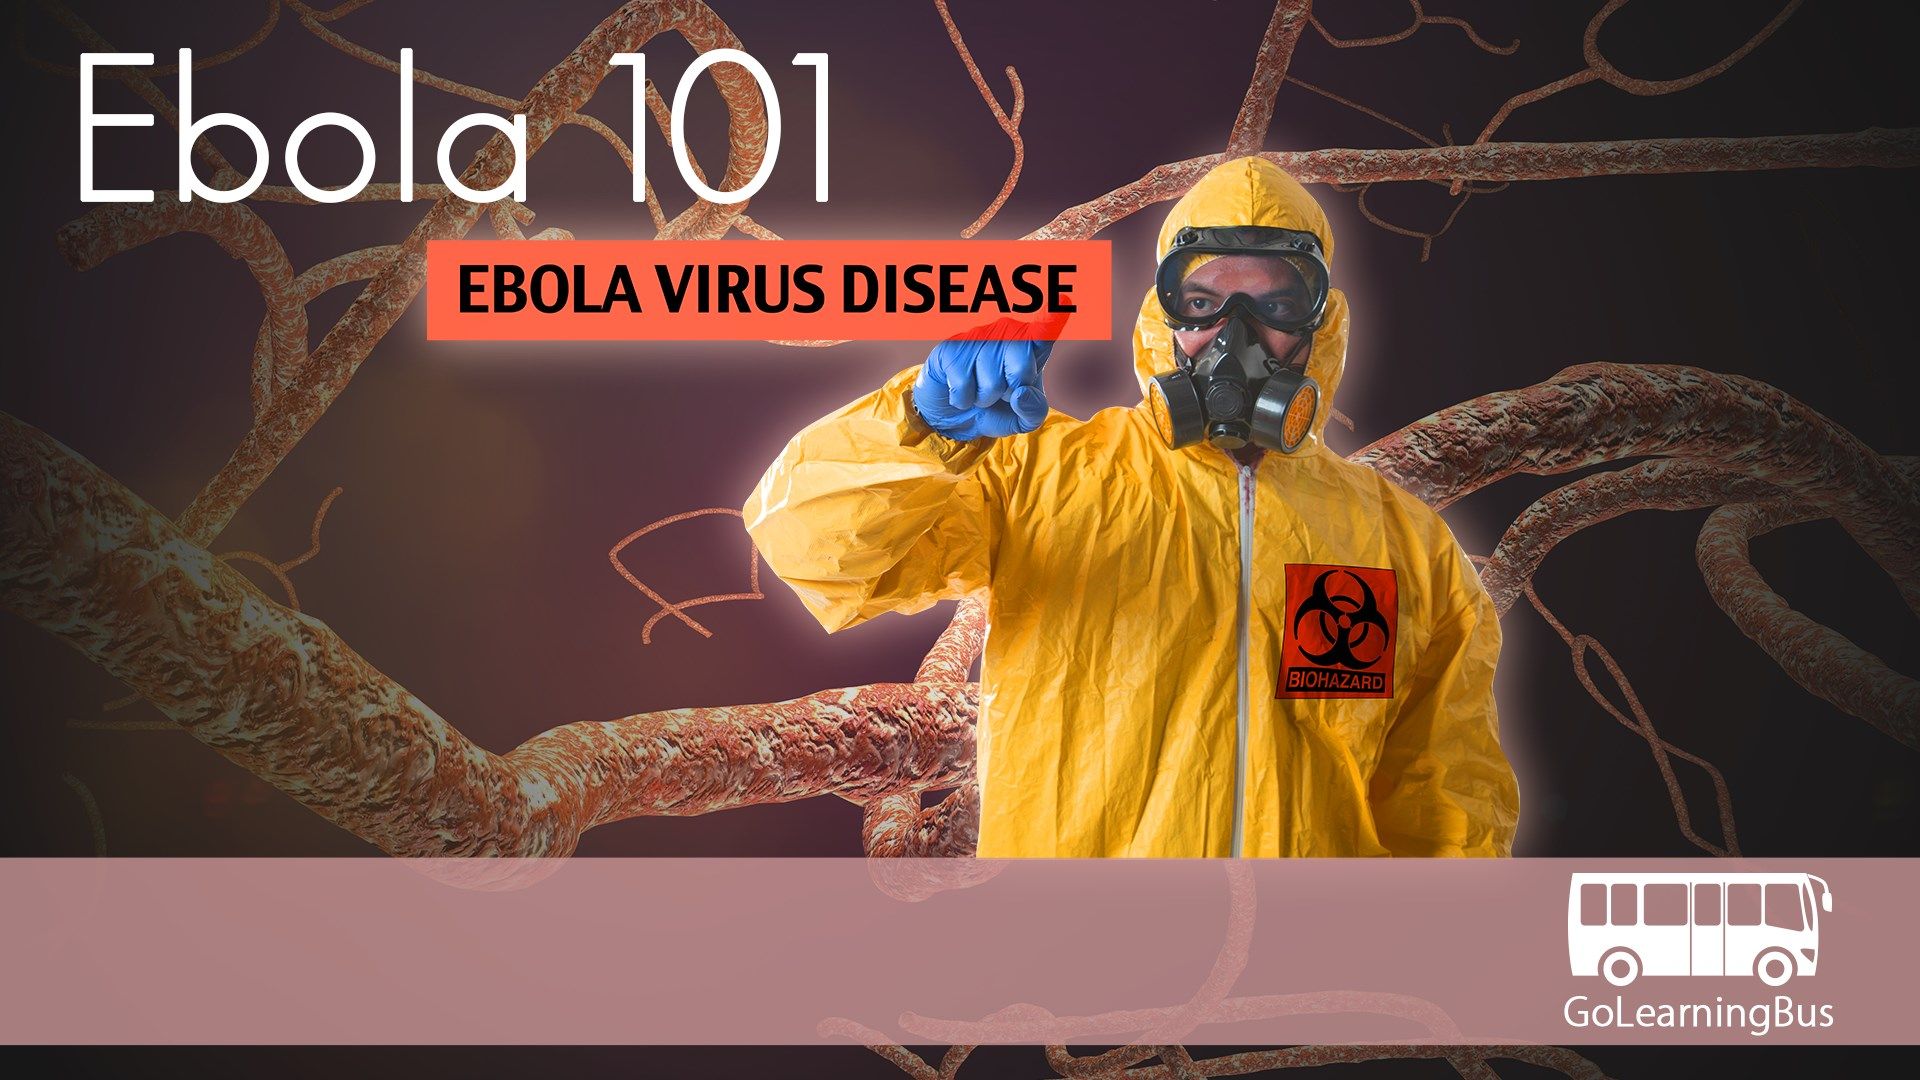 Ebola 101